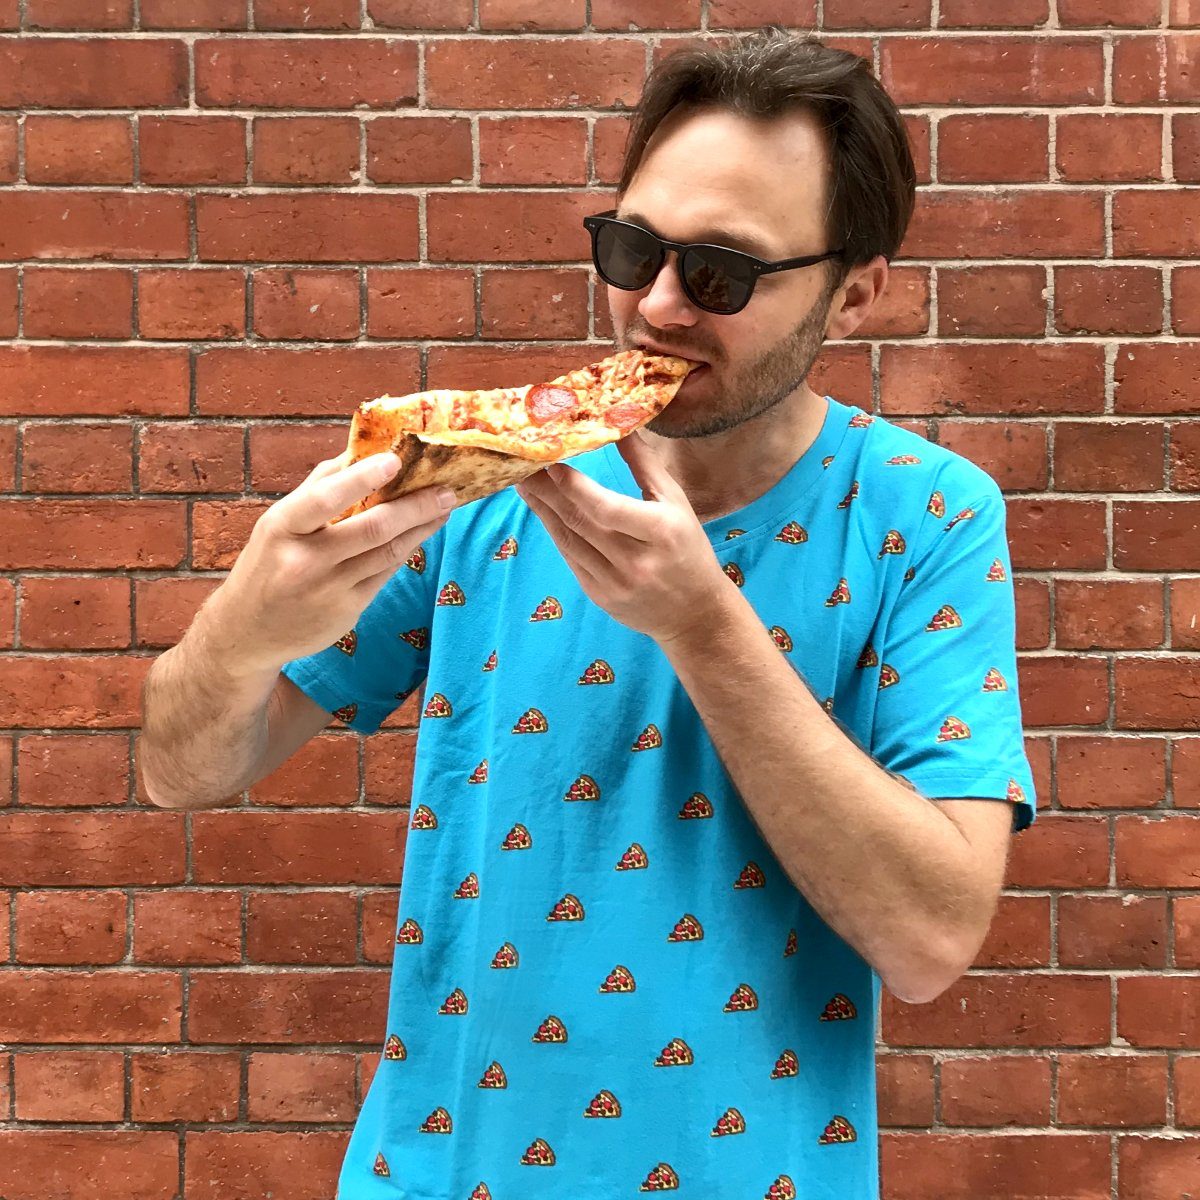 Pizza T-Shirt For Men. Buy A Funny Men's Pizza Print Shirt